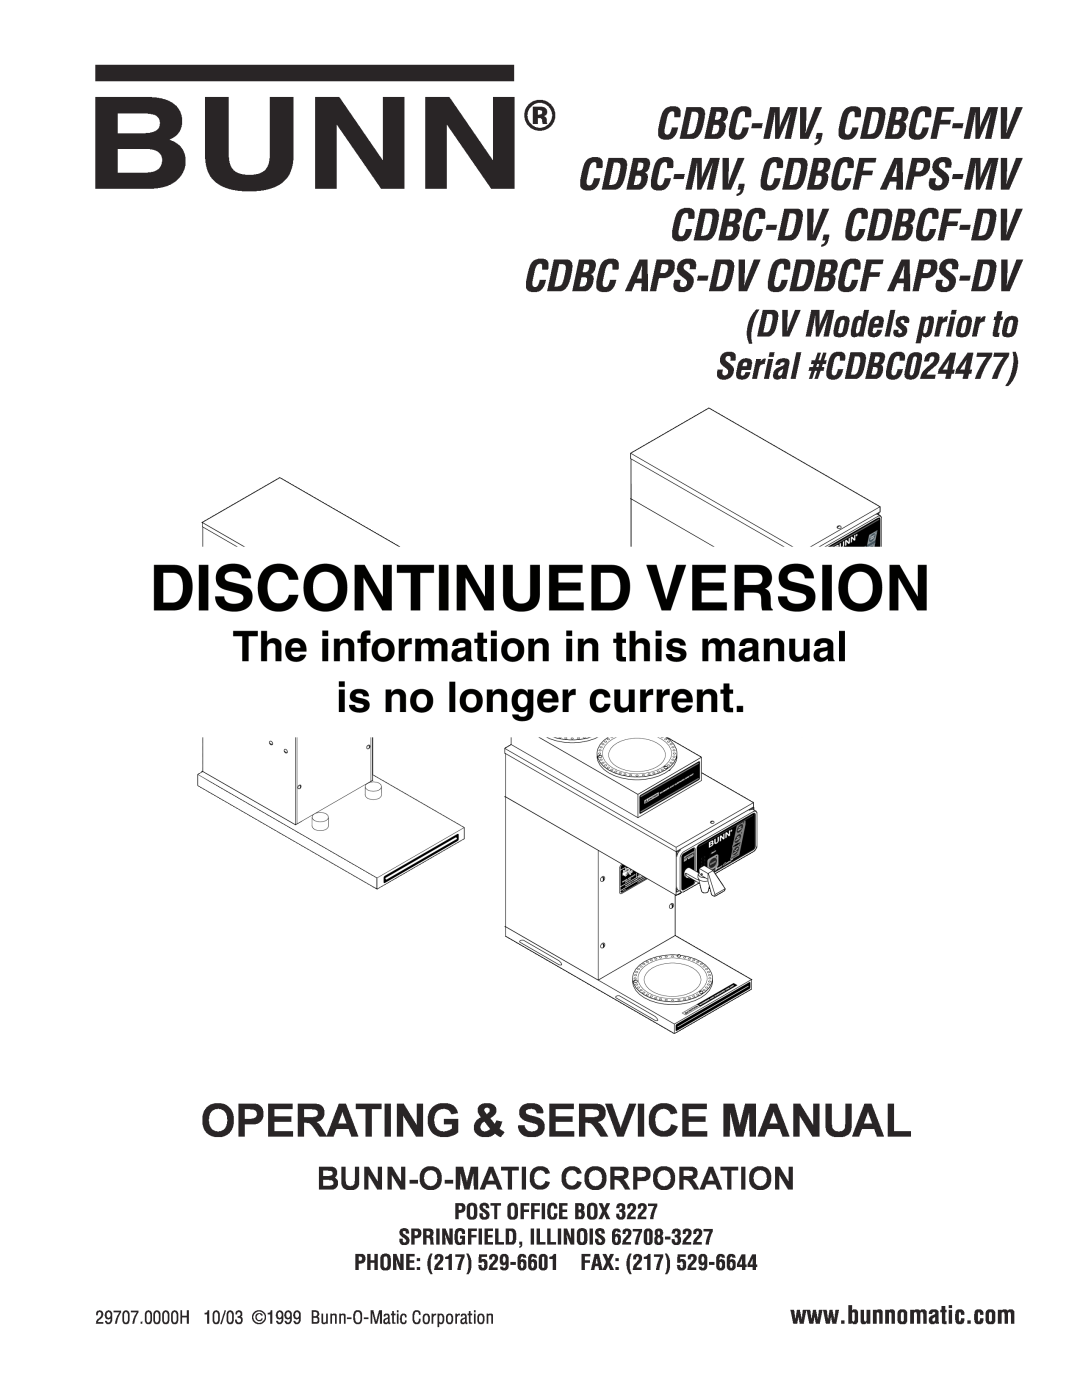 Bunn CDBC APS-DV service manual Post Office Box Springfield, Illinois, PHONE 217 529-6601FAX, Discontinued Version 